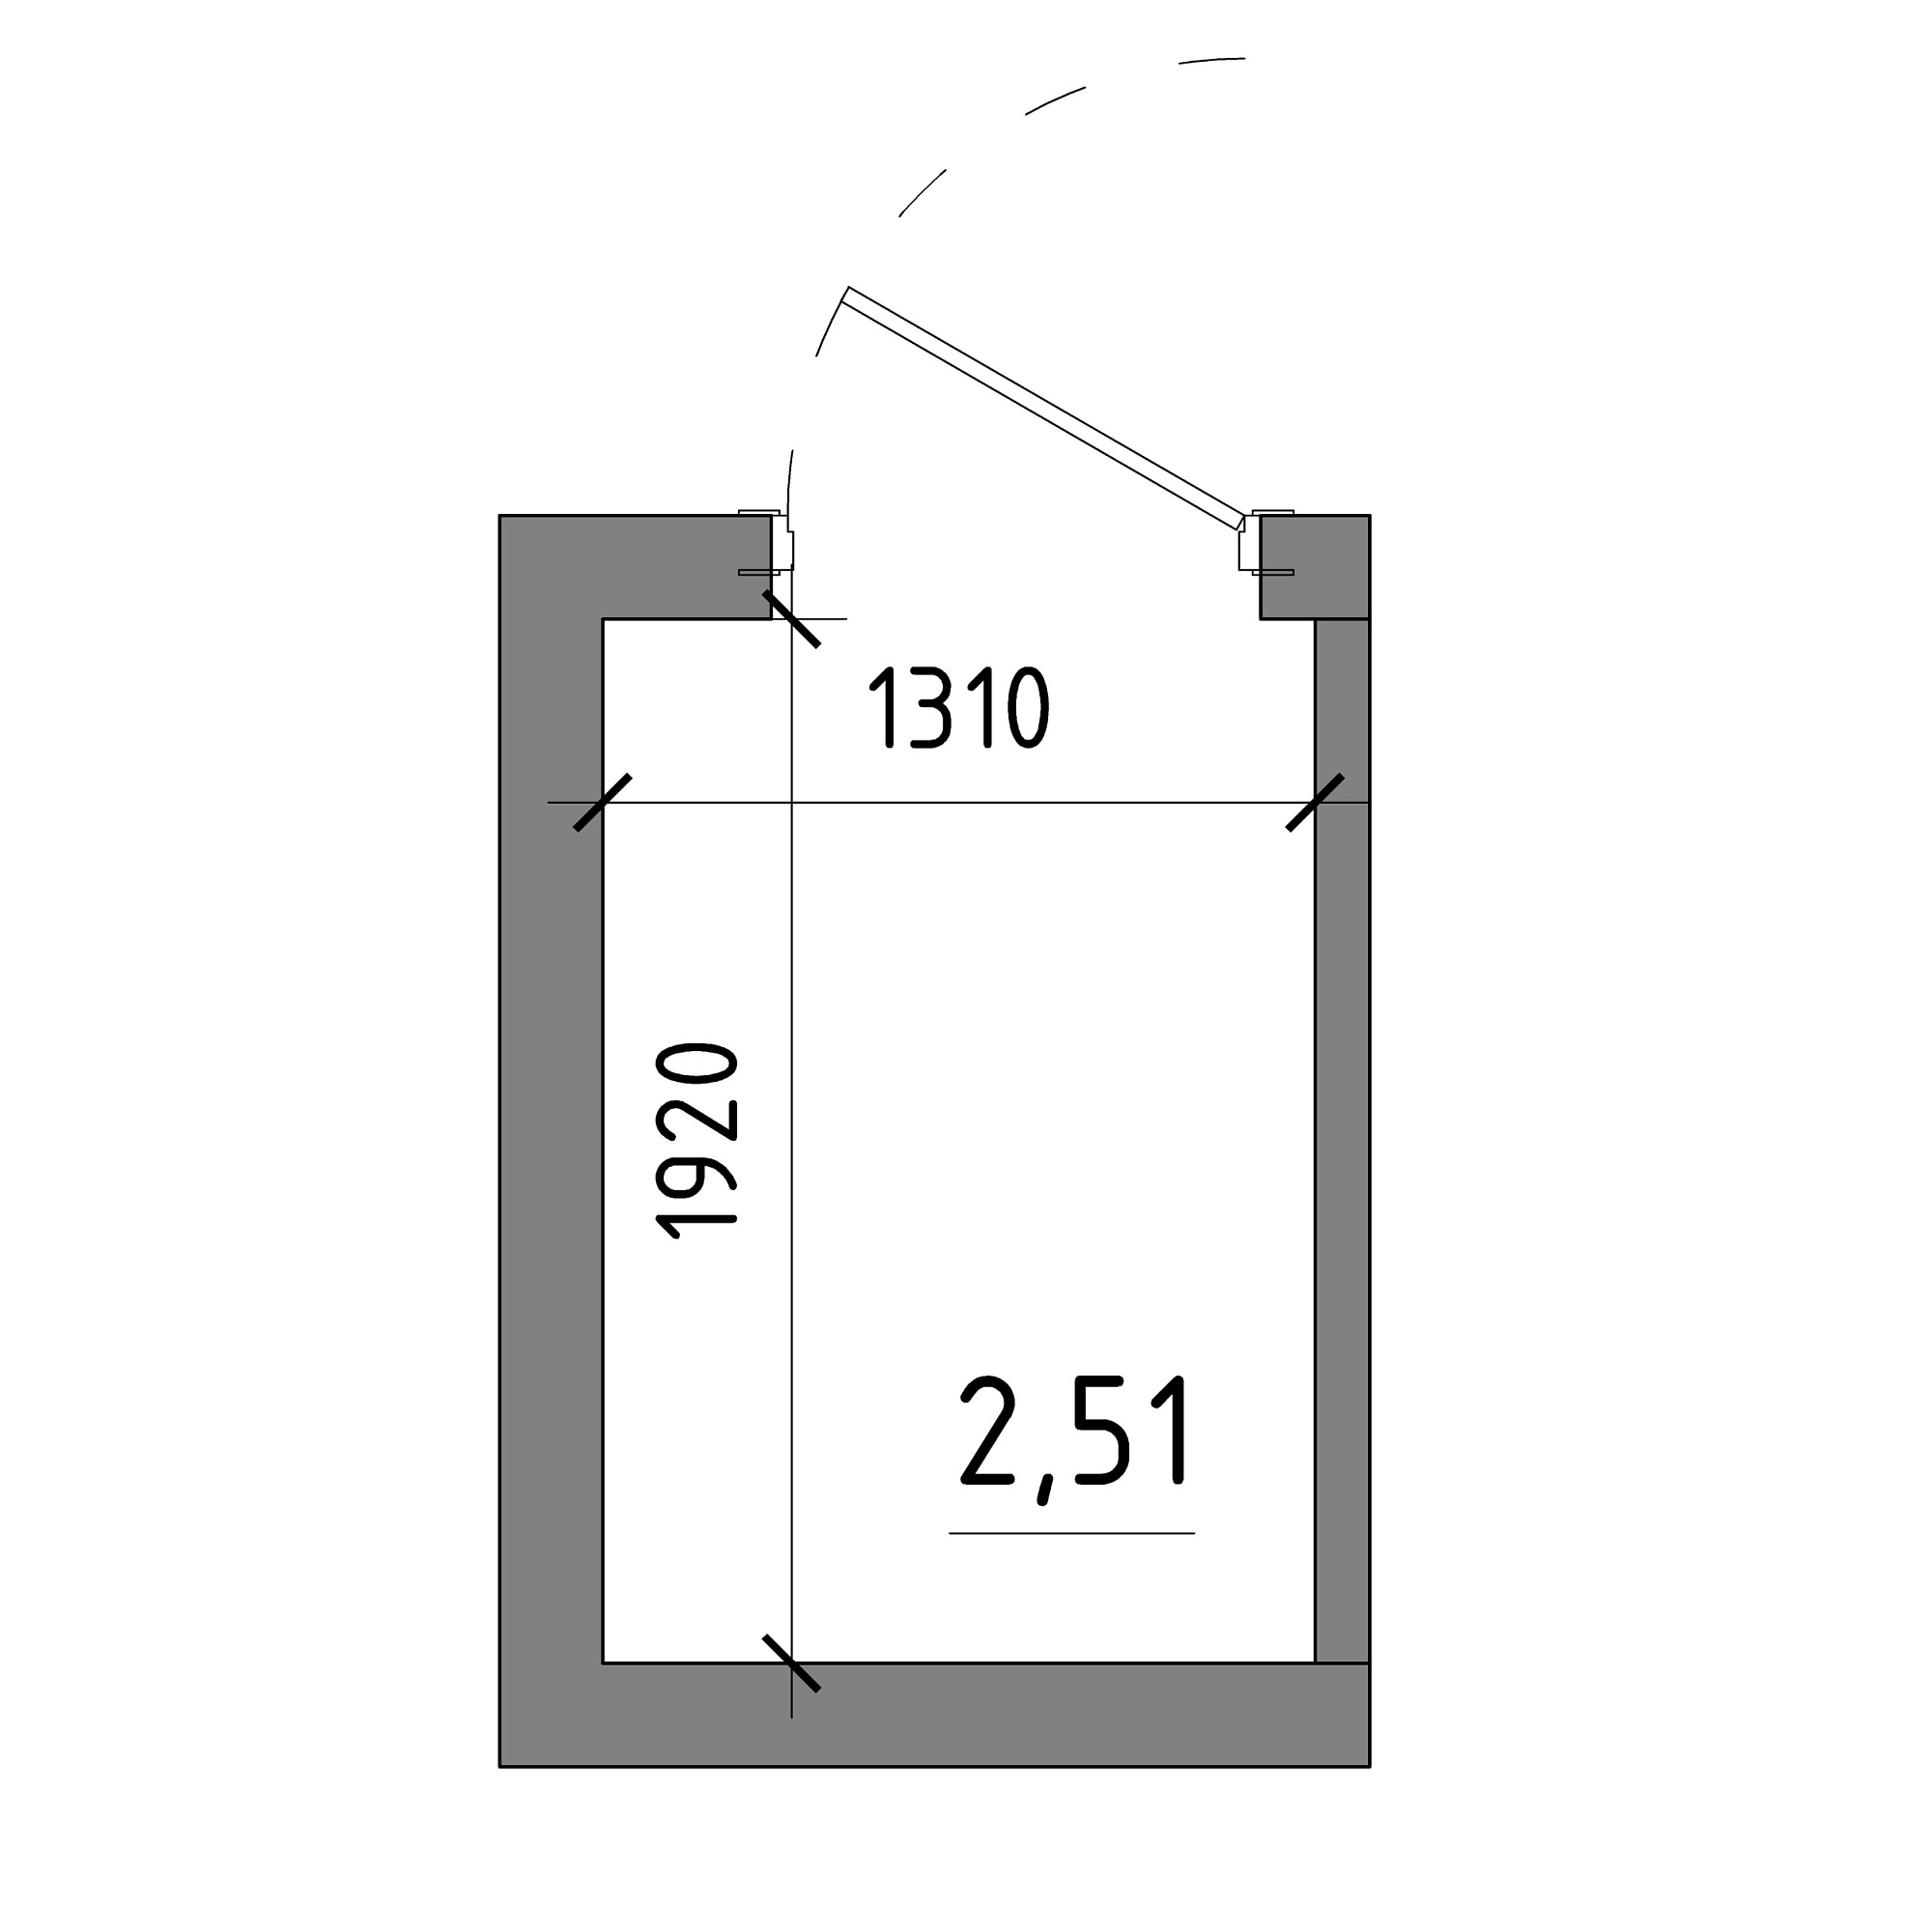 Planning Storeroom area 2.51m2, AB-17-05/К0002.